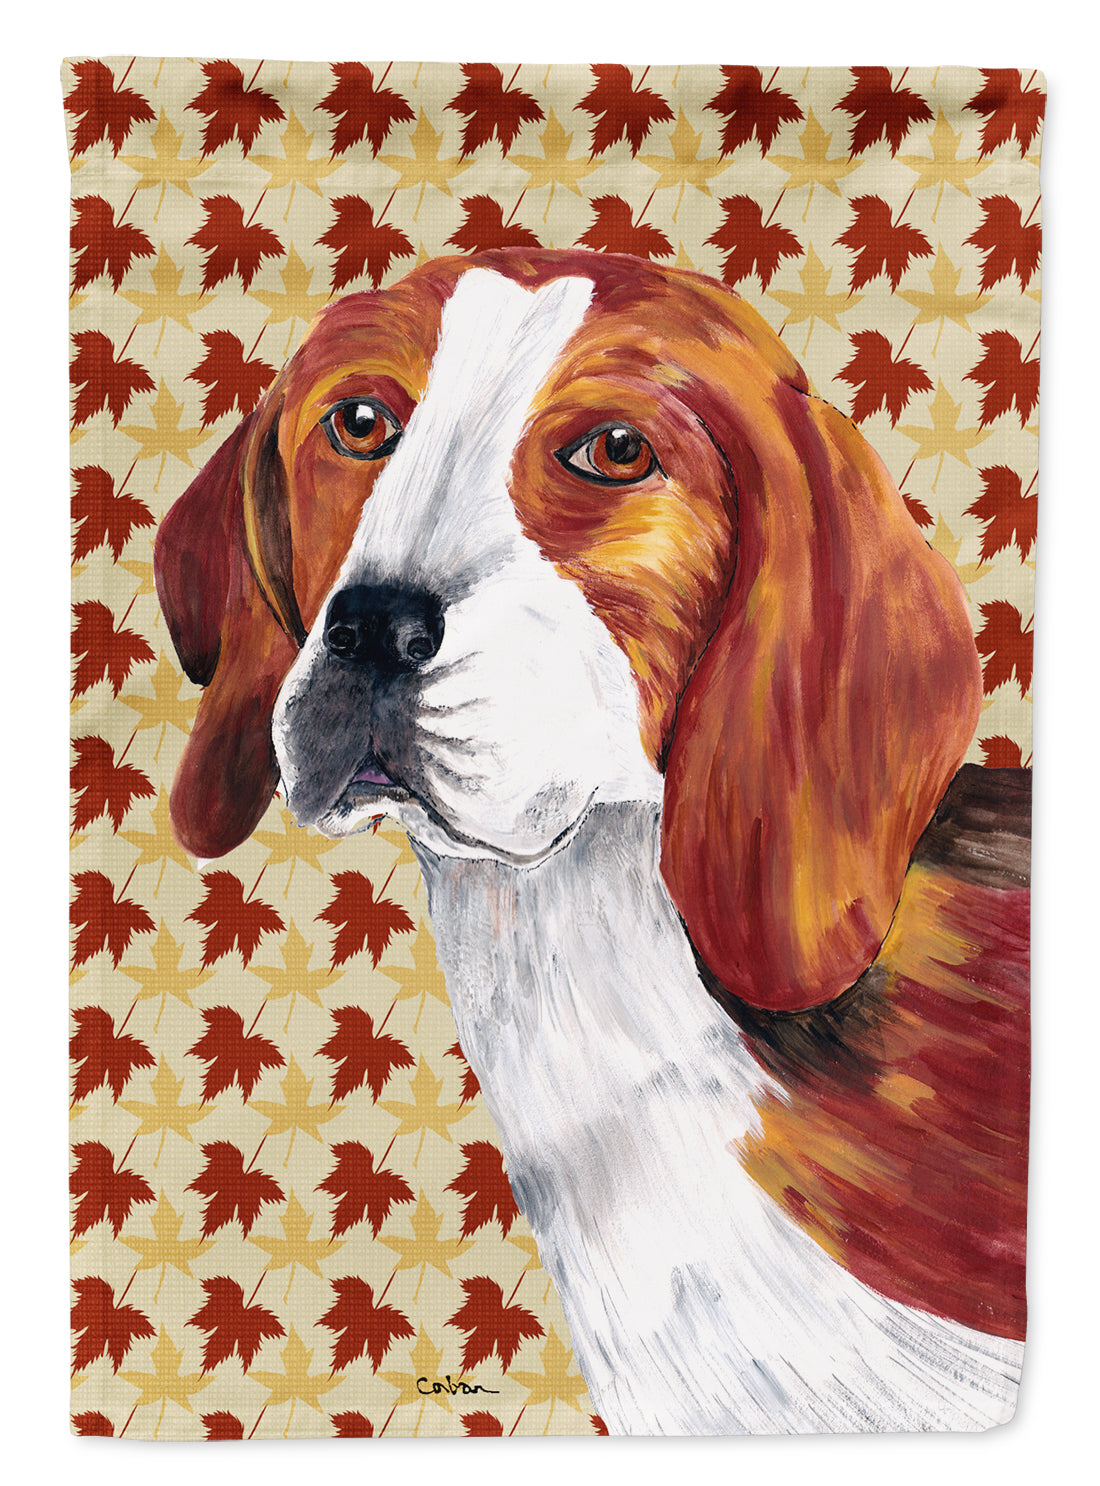 Beagle Fall Leaves Portrait Flag Garden Size.